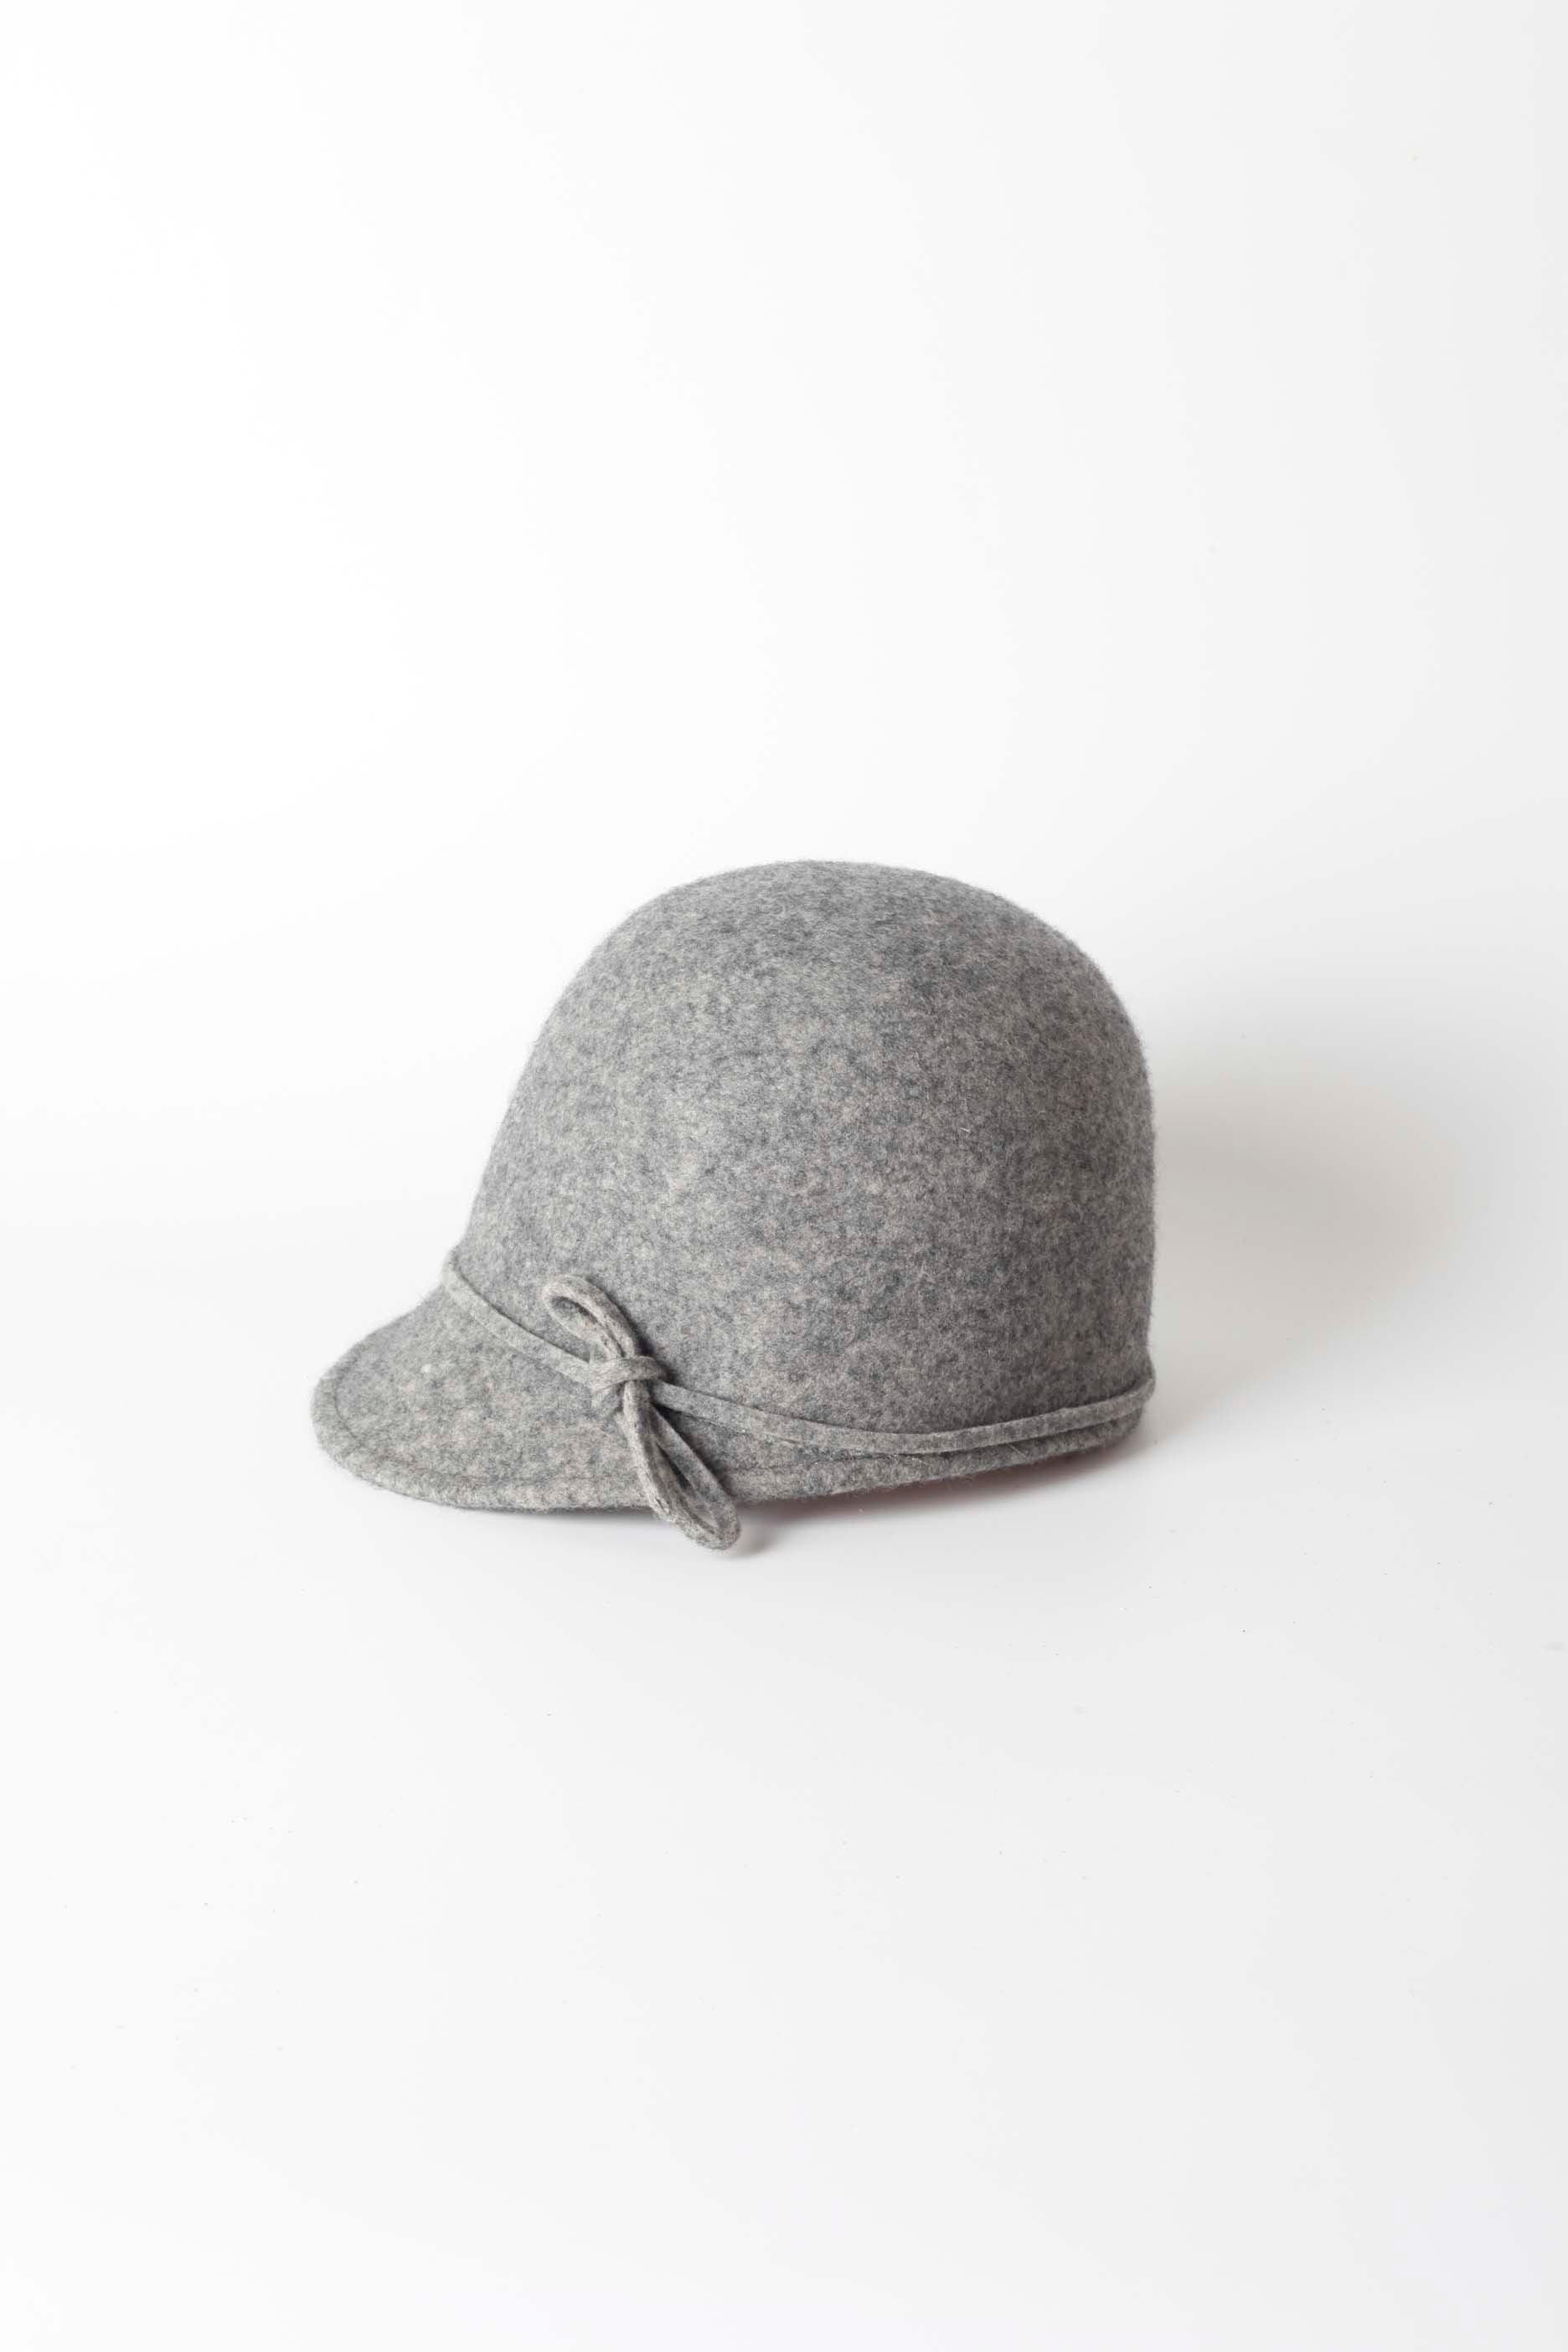 Girls Grey Felt Cloche Hat